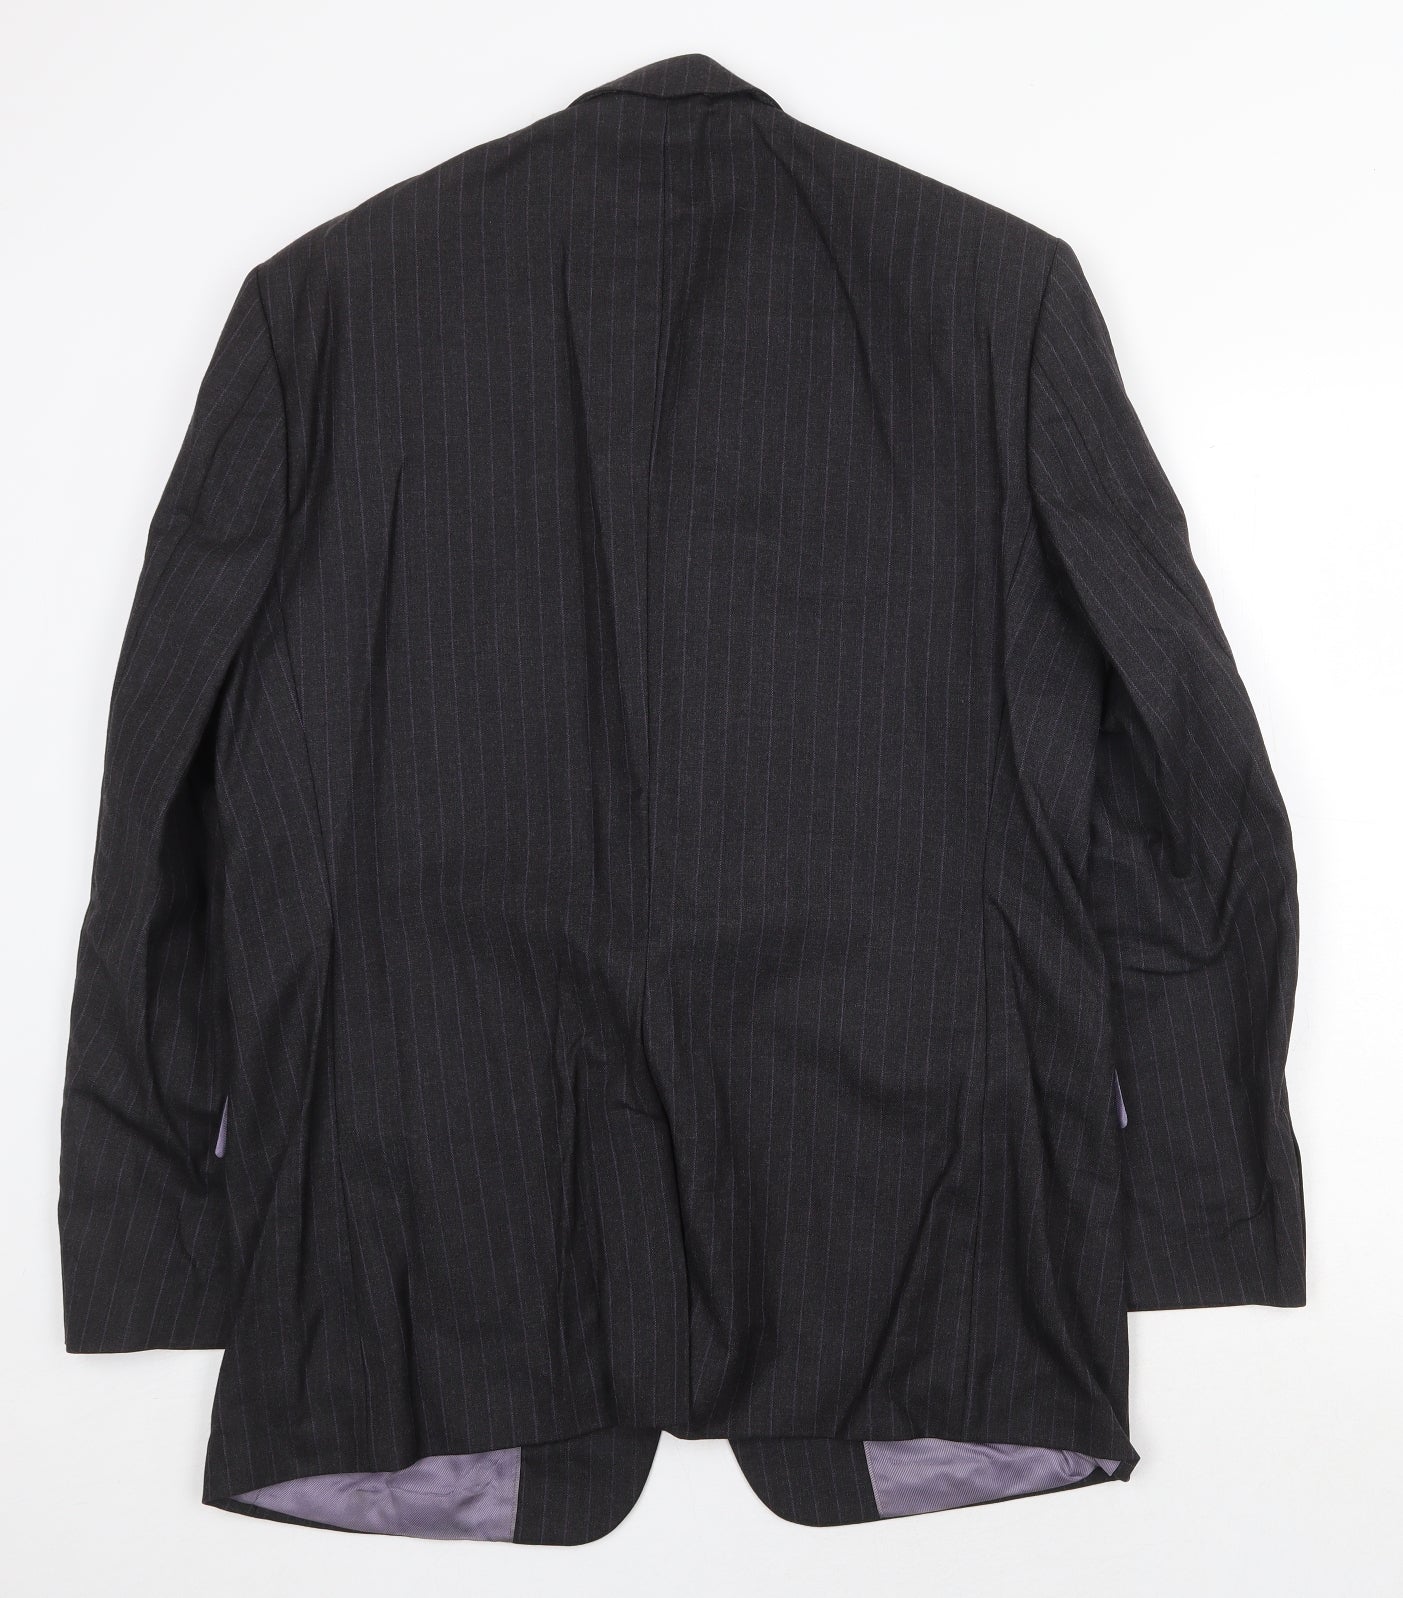 West Brook Mens Grey Striped Wool Jacket Suit Jacket Size 40 Regular